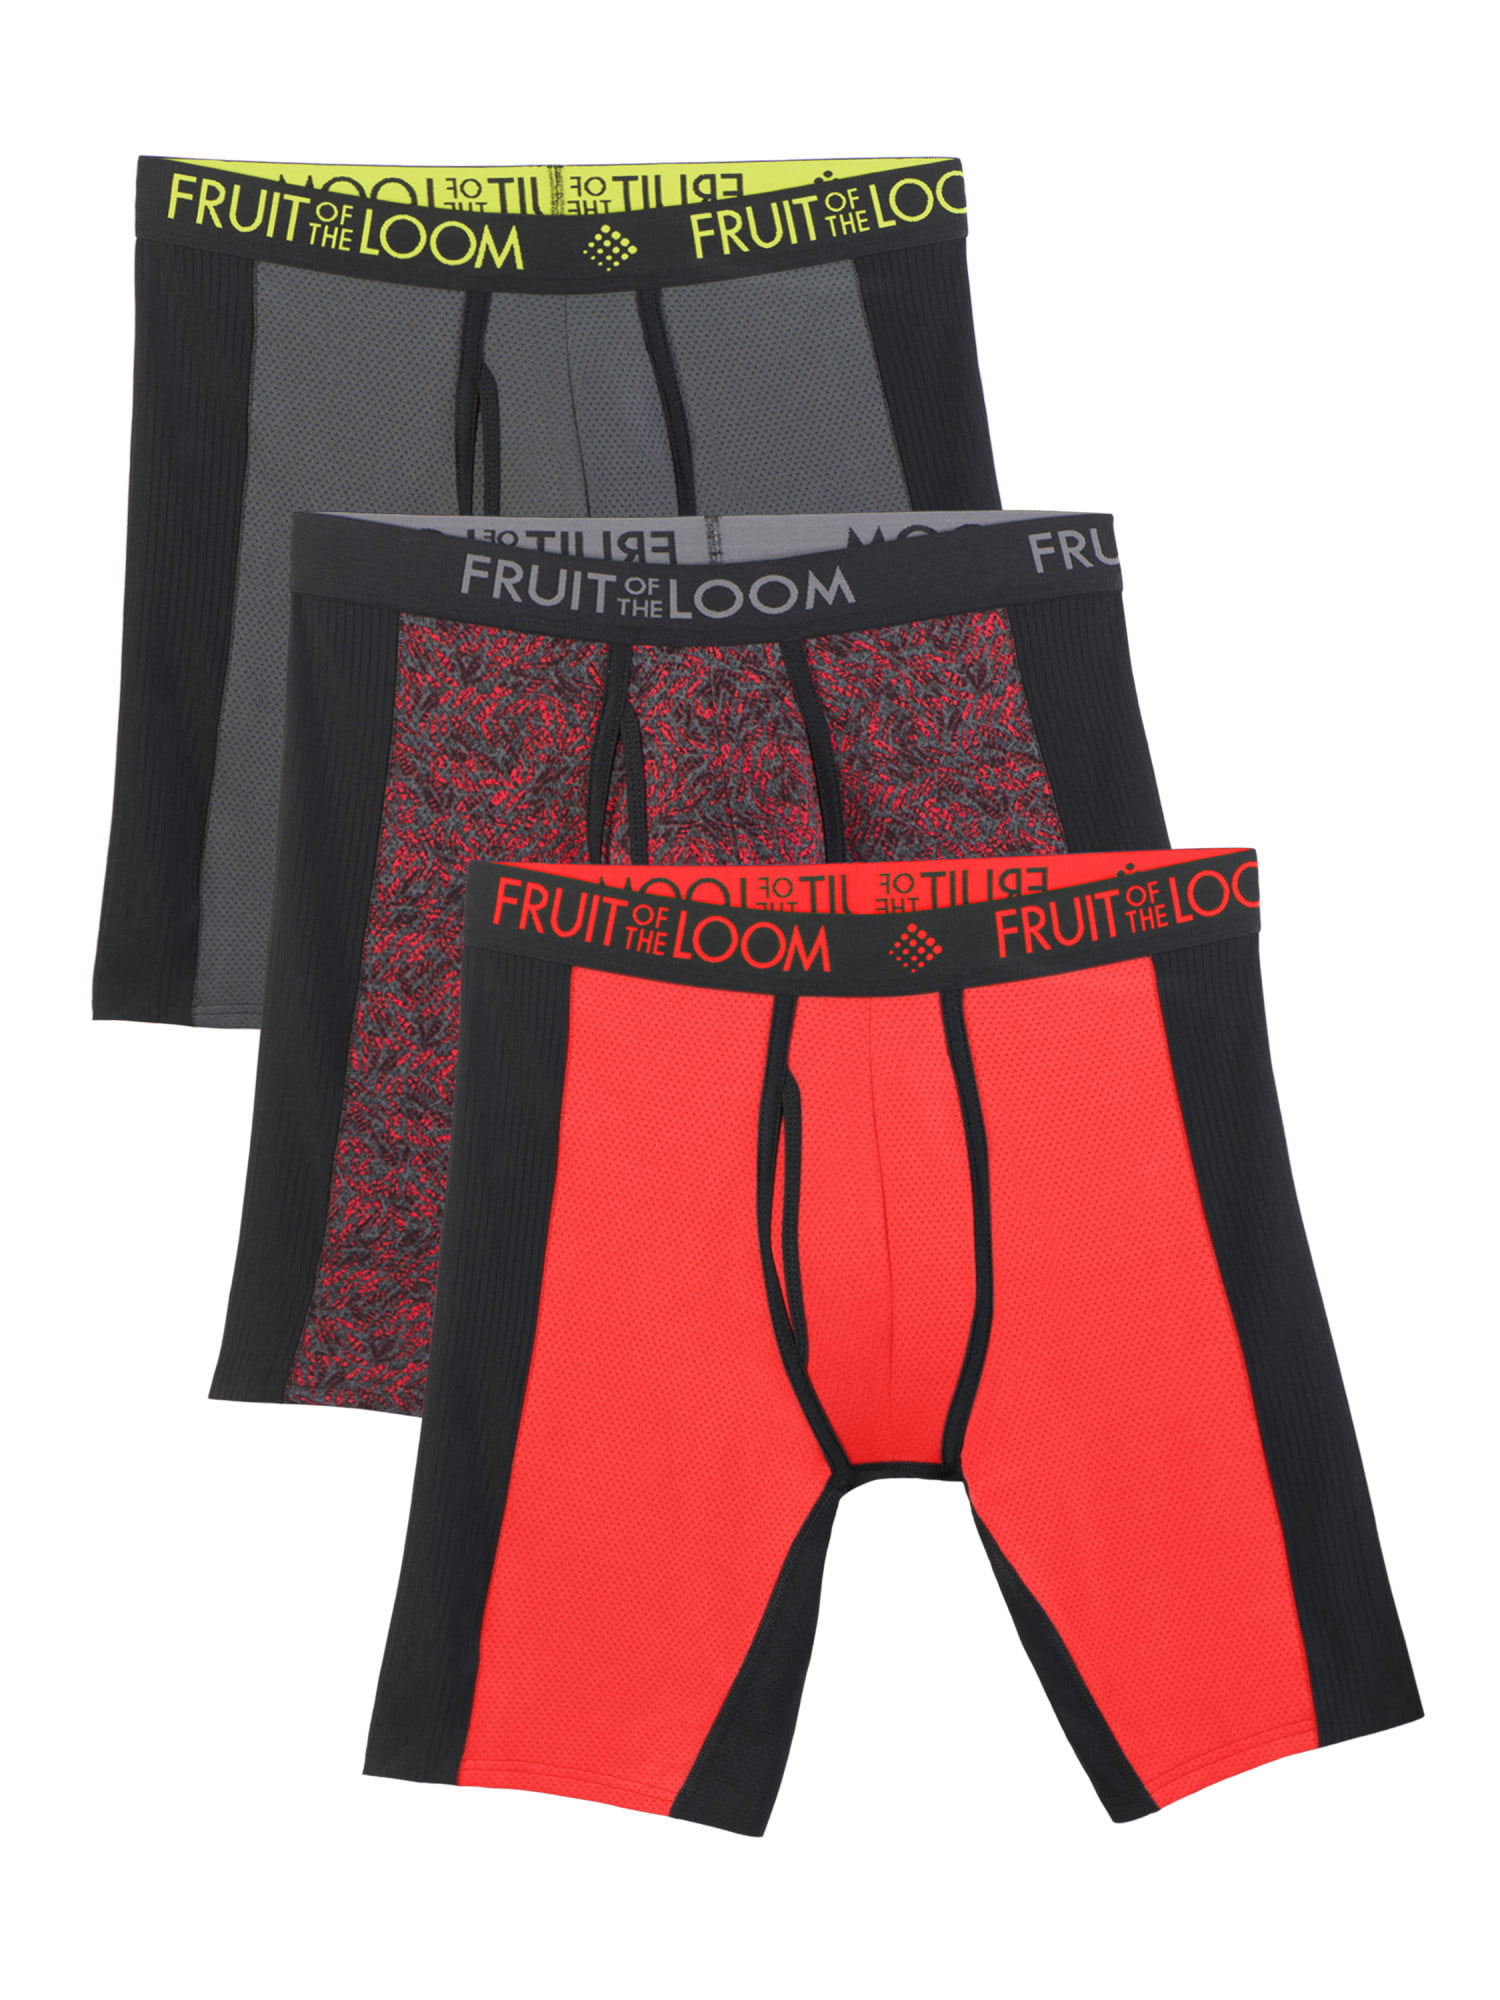 3 New Fruit of the Loom Men/'s Assorted Lightweight Long Length Boxer Briefs